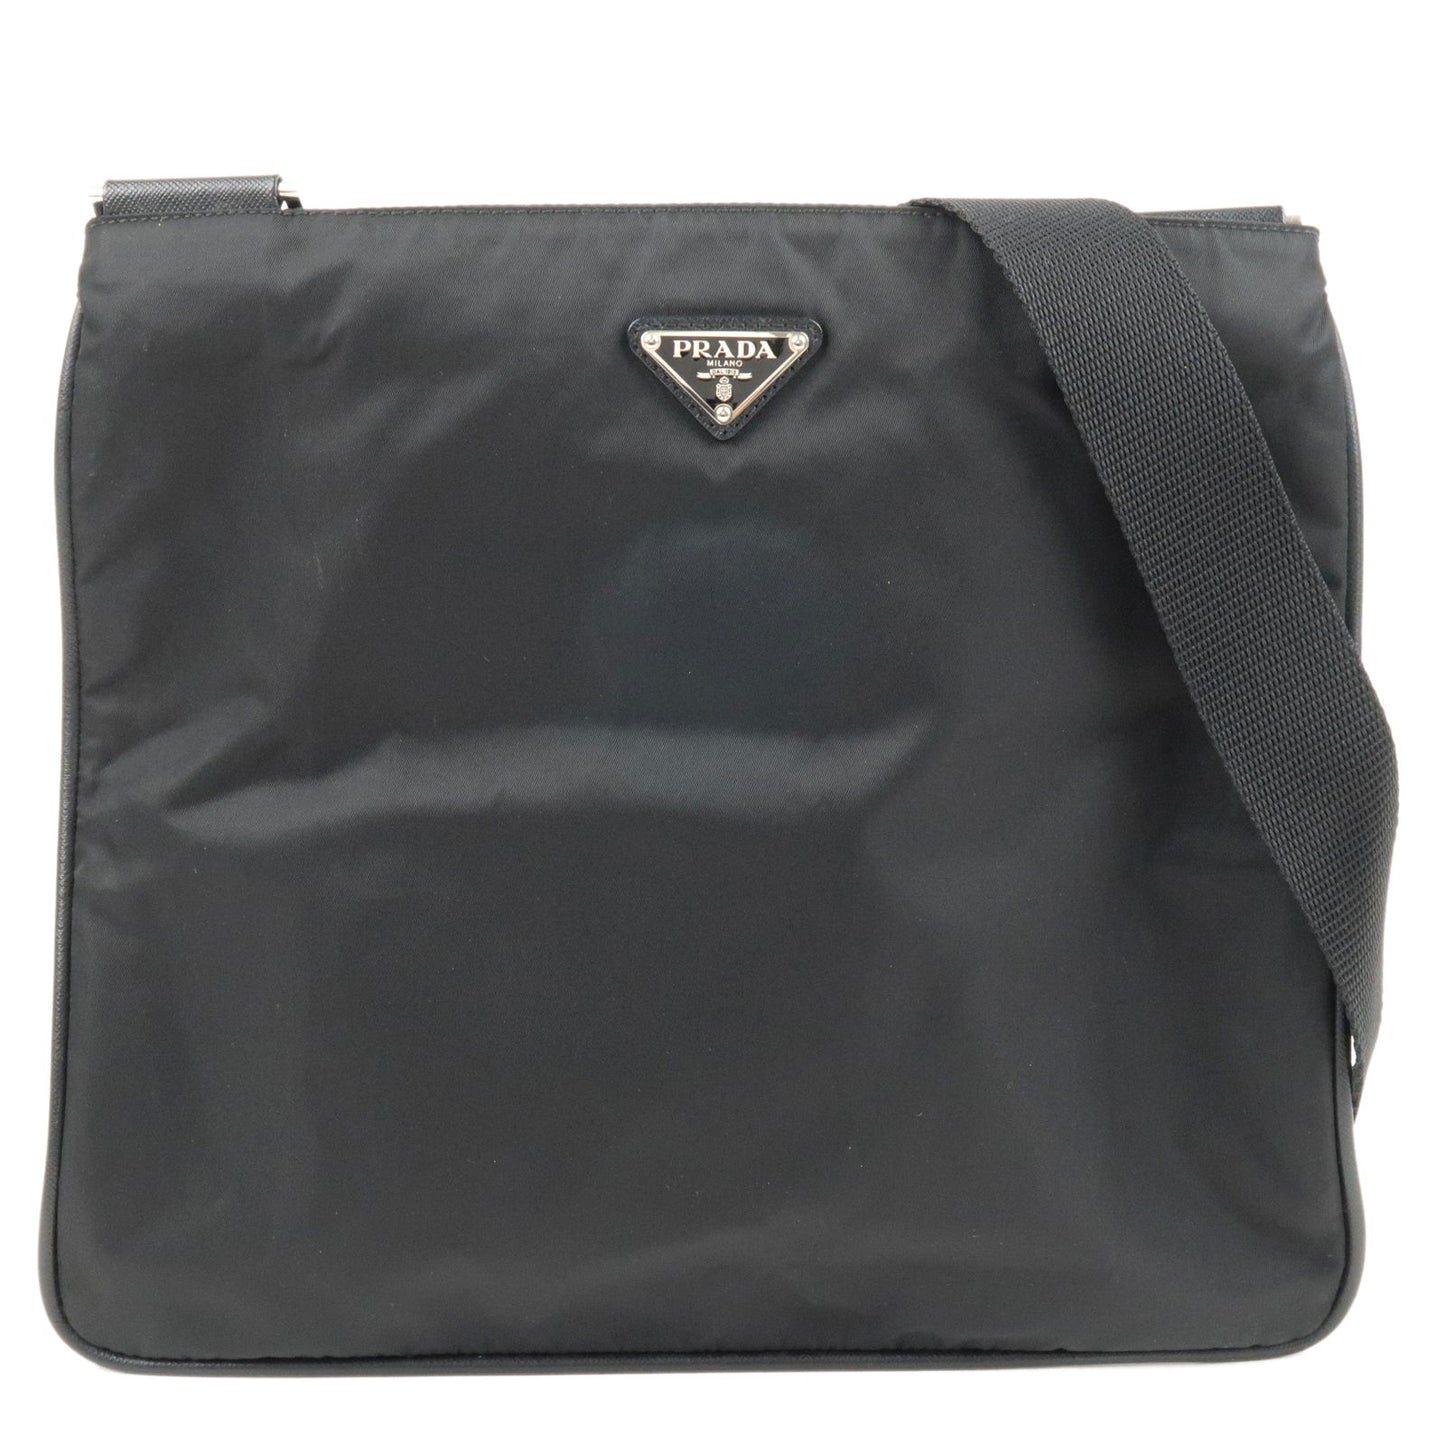 PRADA-Logo-Nylon-Leather-Shoulder-Bag-NERO-Black